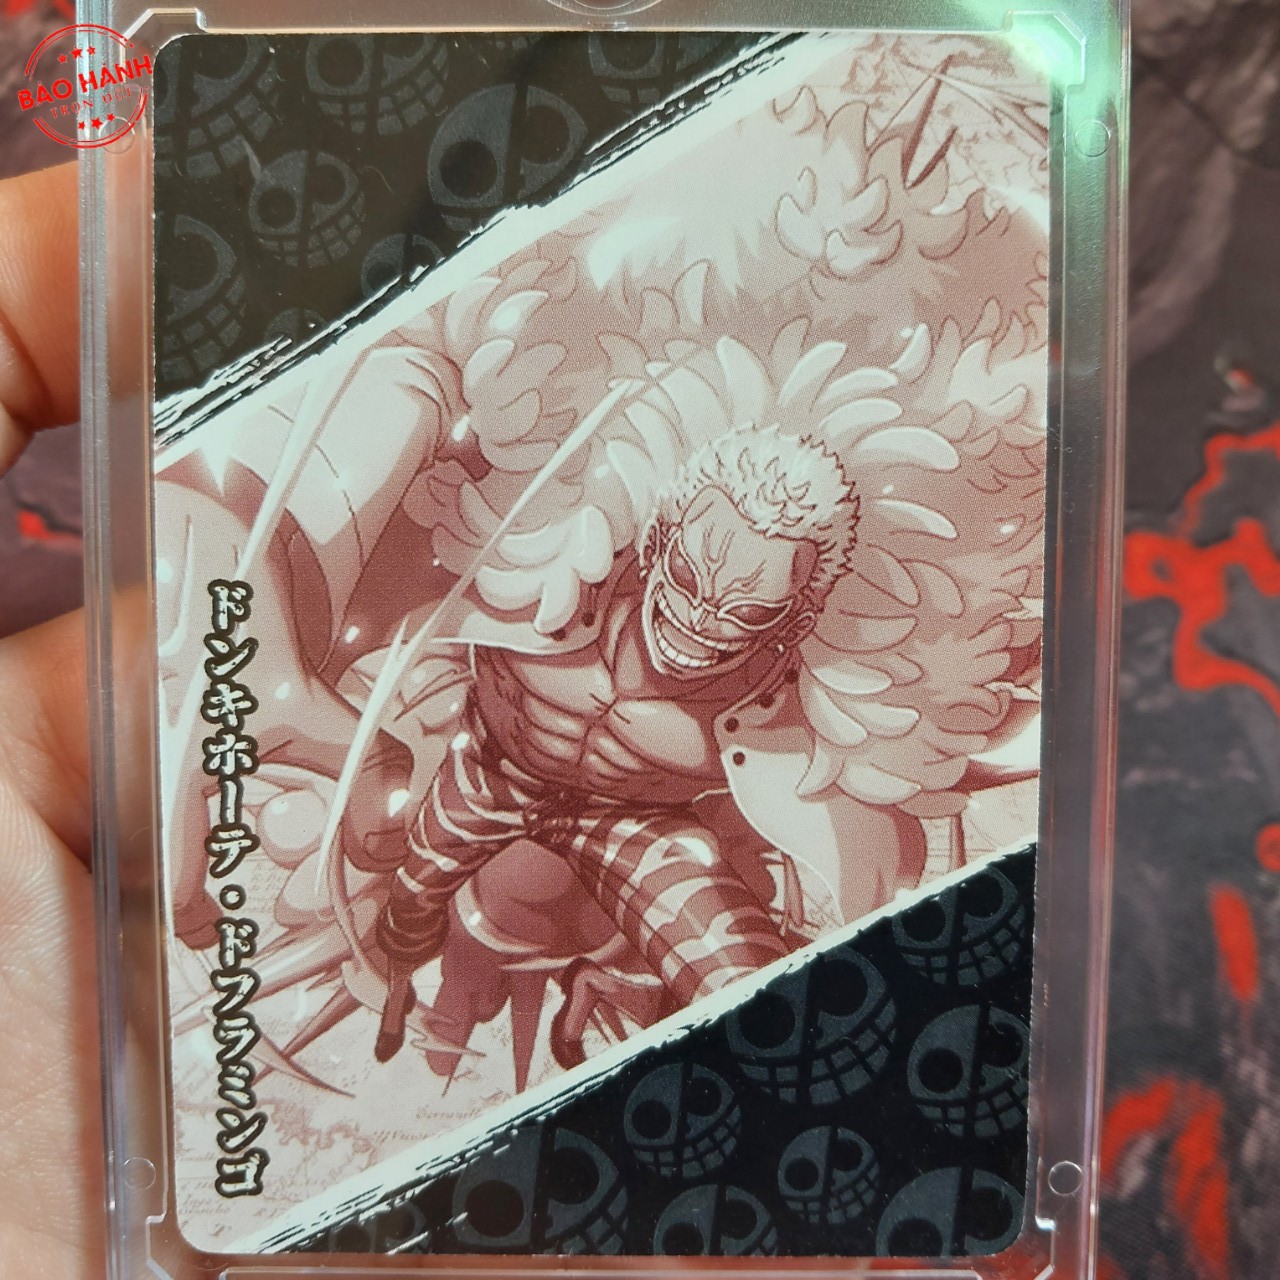 Donquixote Doflamingo OPOL SR31 SR Thẻ OnePiece nhật CARD RANK băng hải tặc Doflamingos Anime One Piece 1459 NF4 1-2